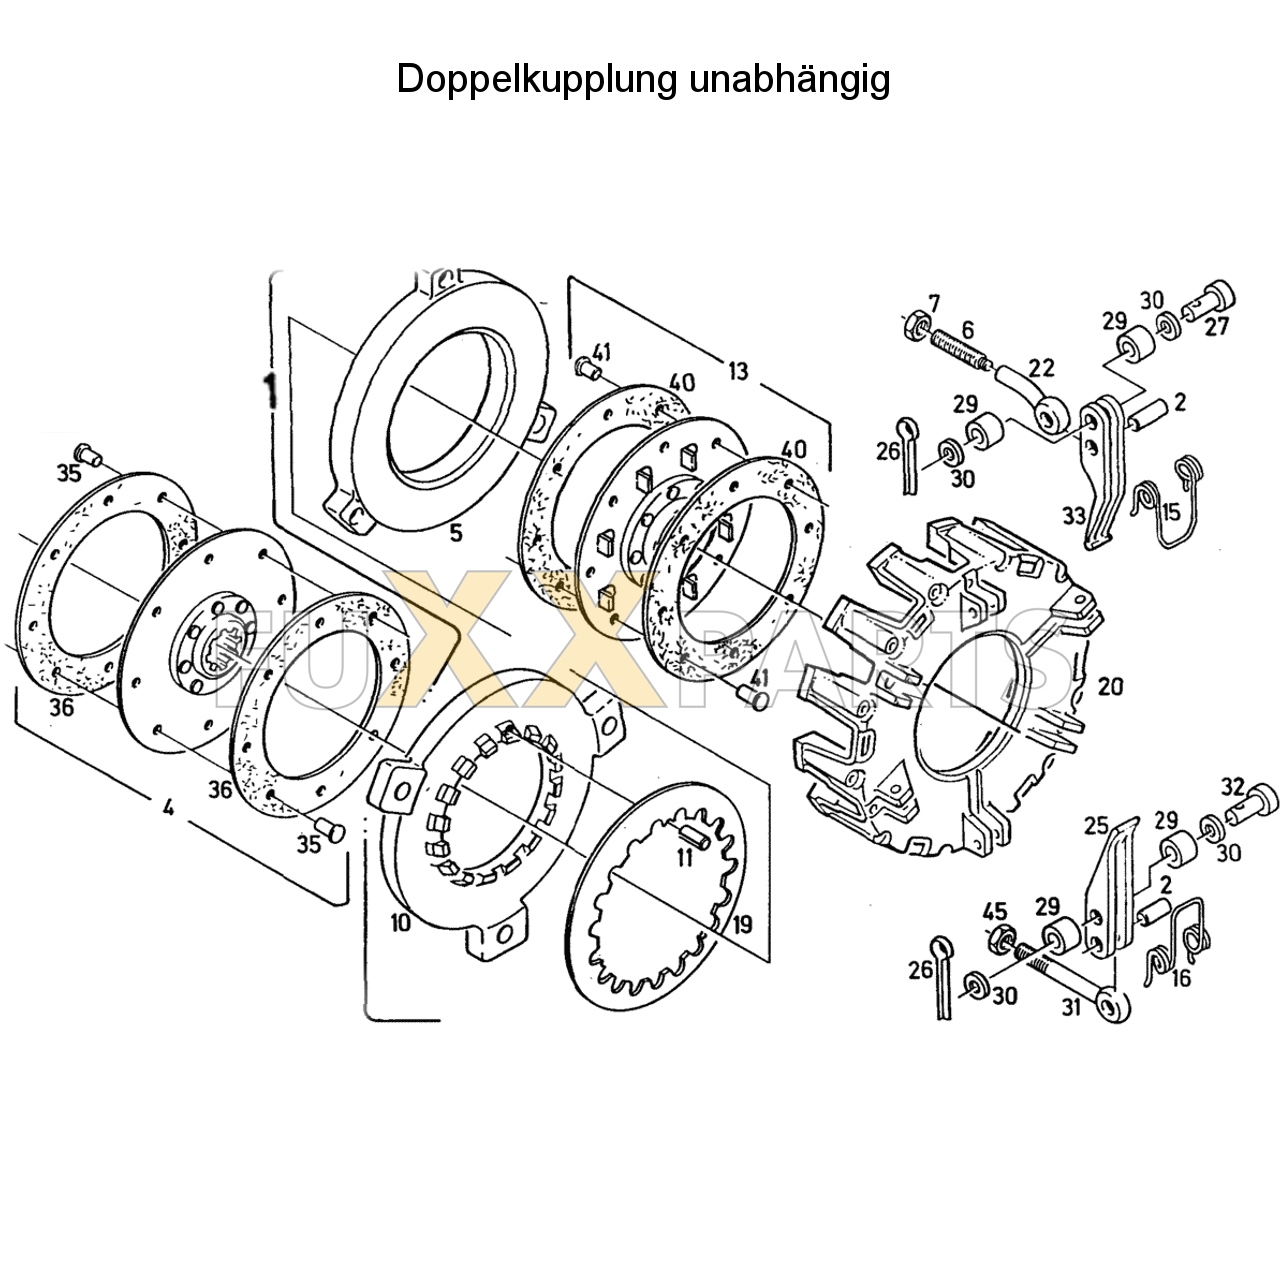 D 6207 C Doppelkupplung unabhängig